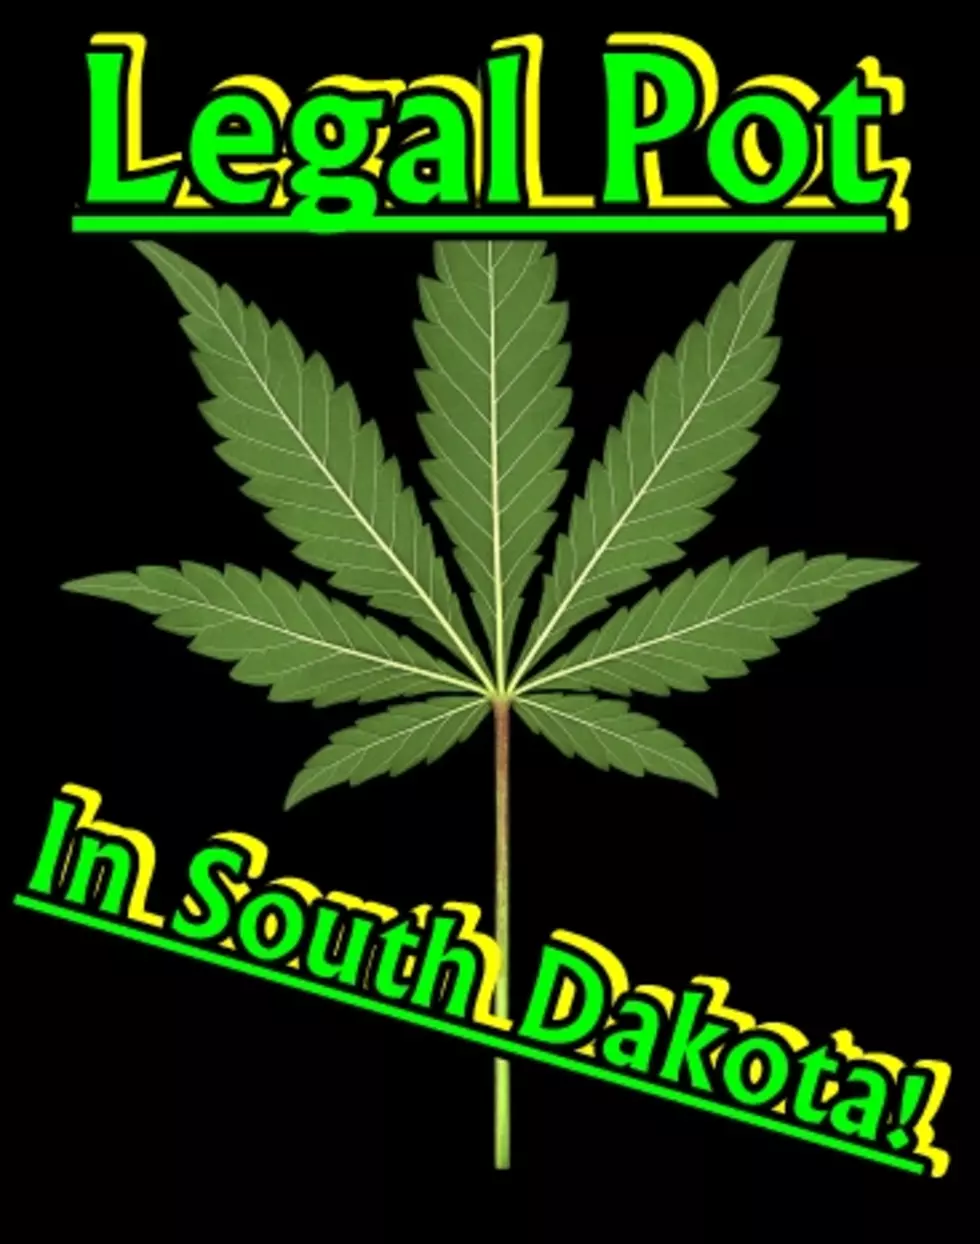 South Dakota Drug Use at an All-Time High